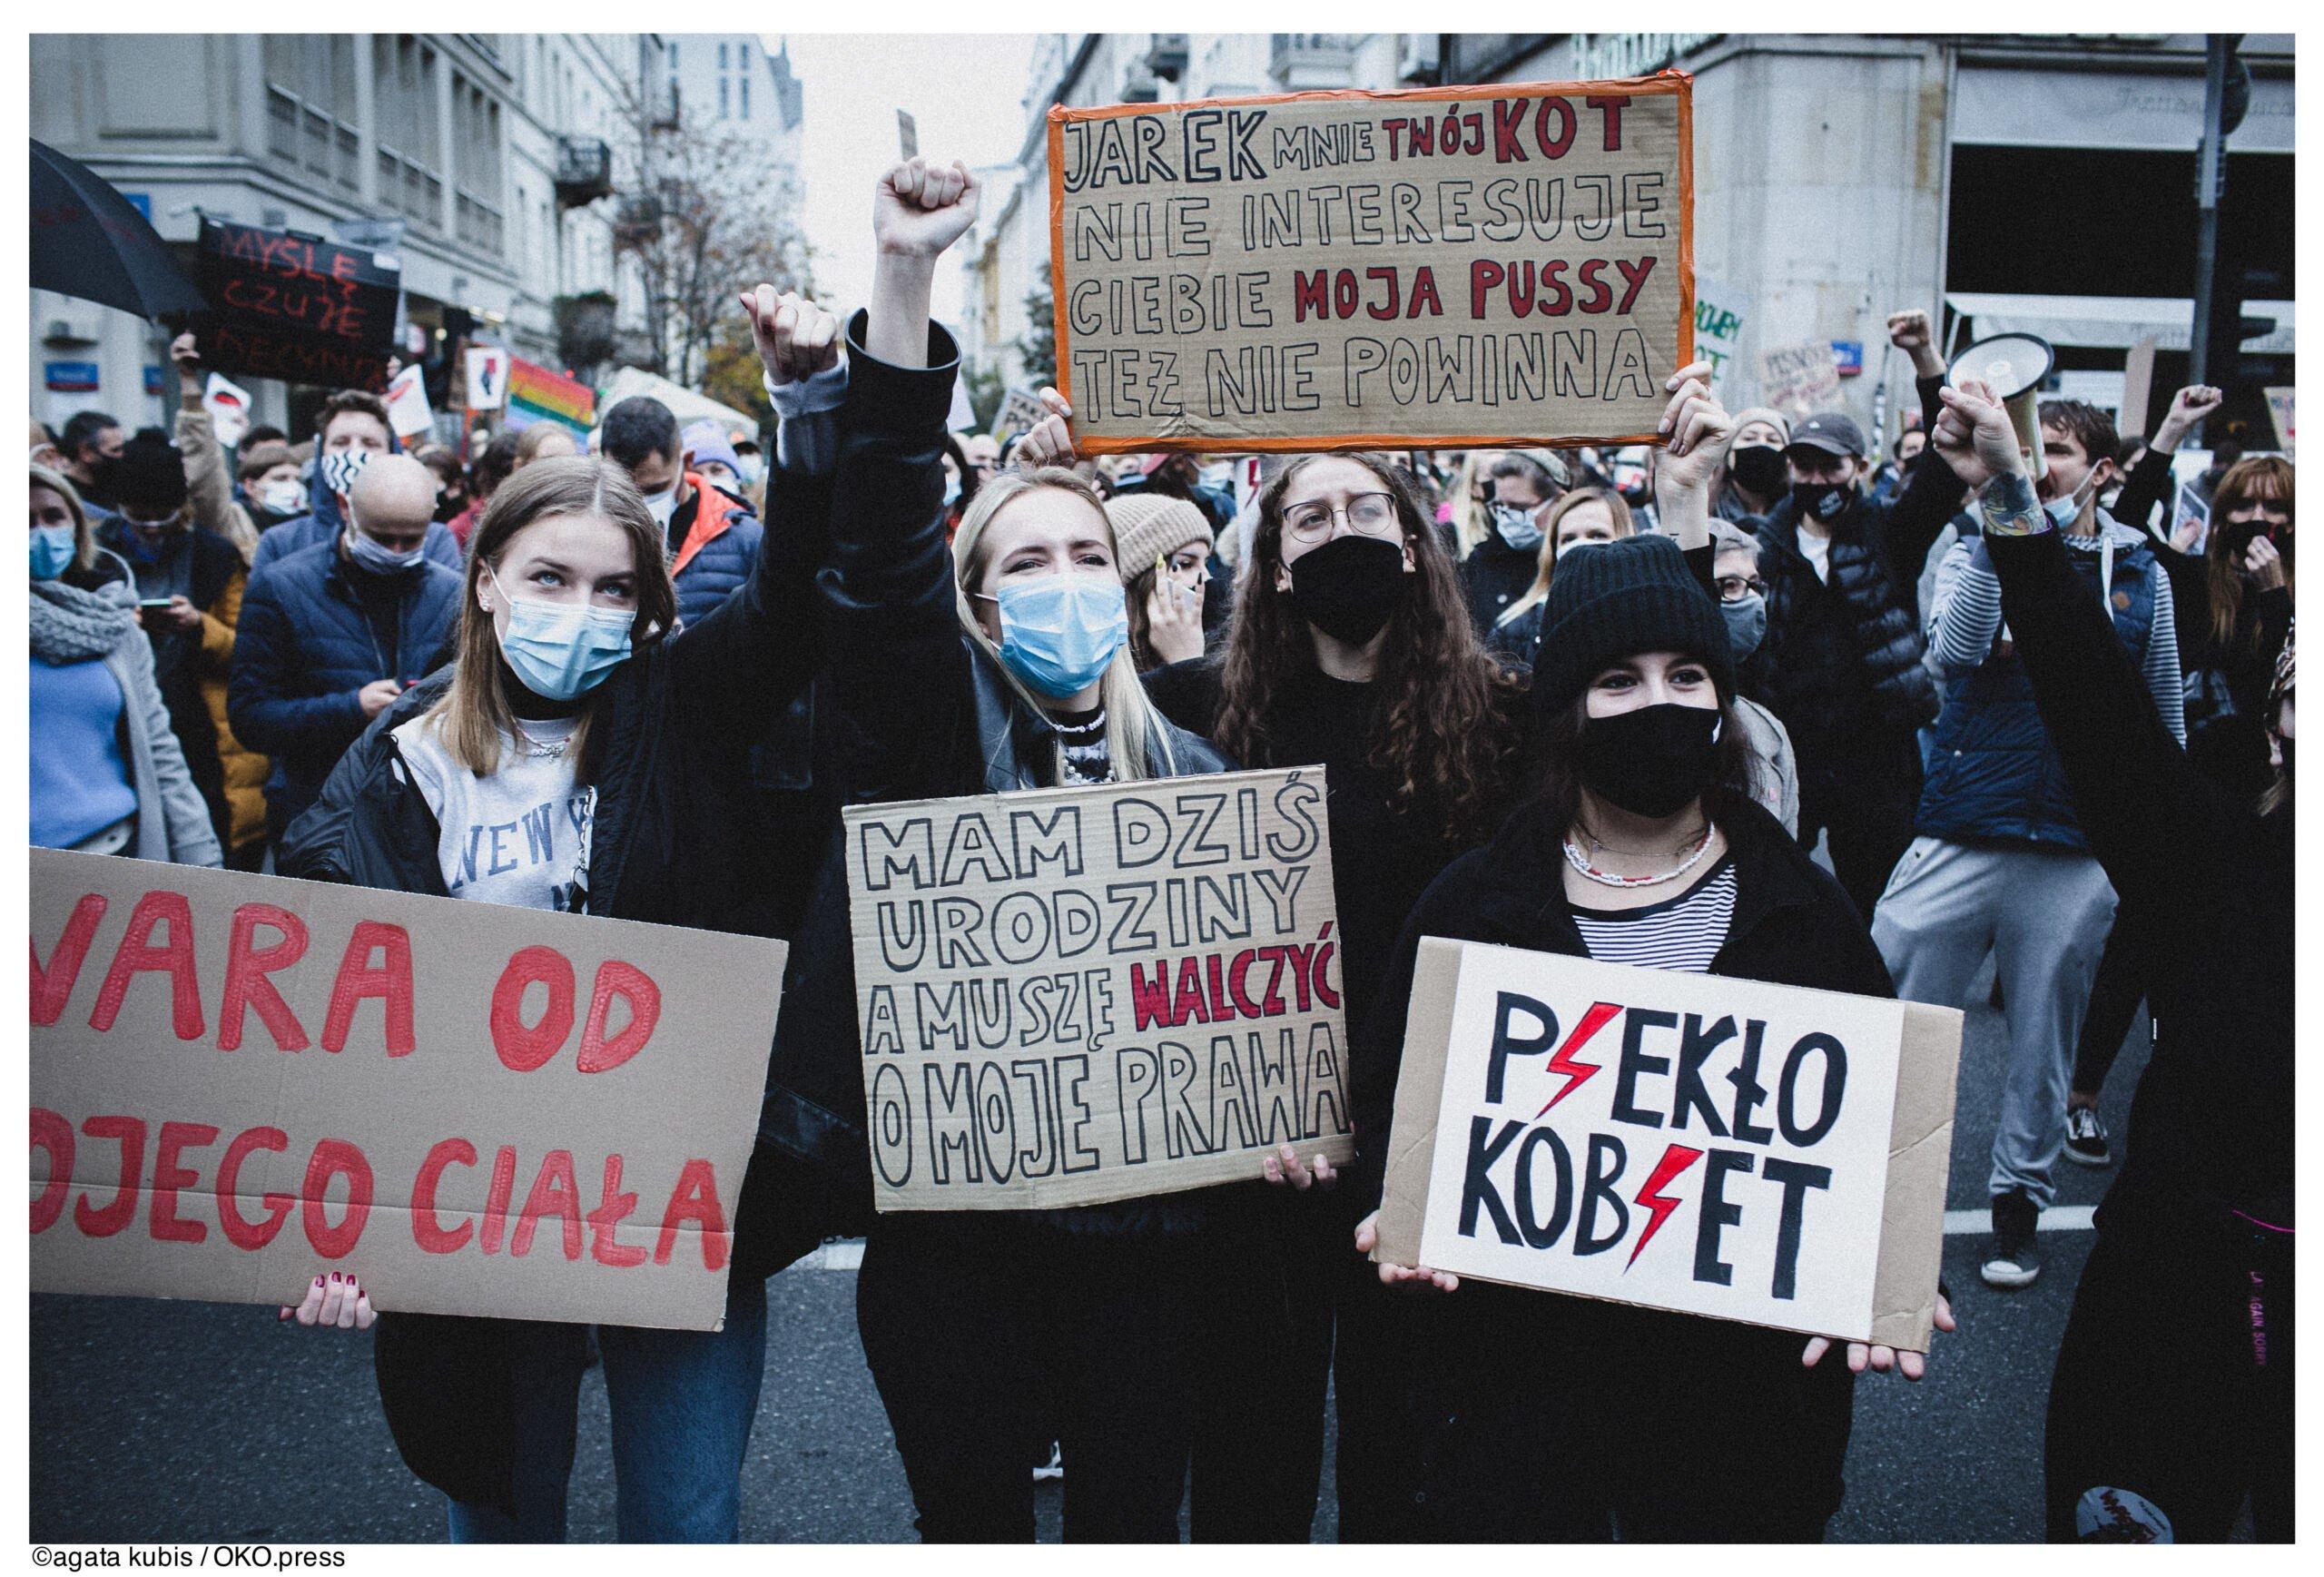 Warszawa, protest 28.10.2020